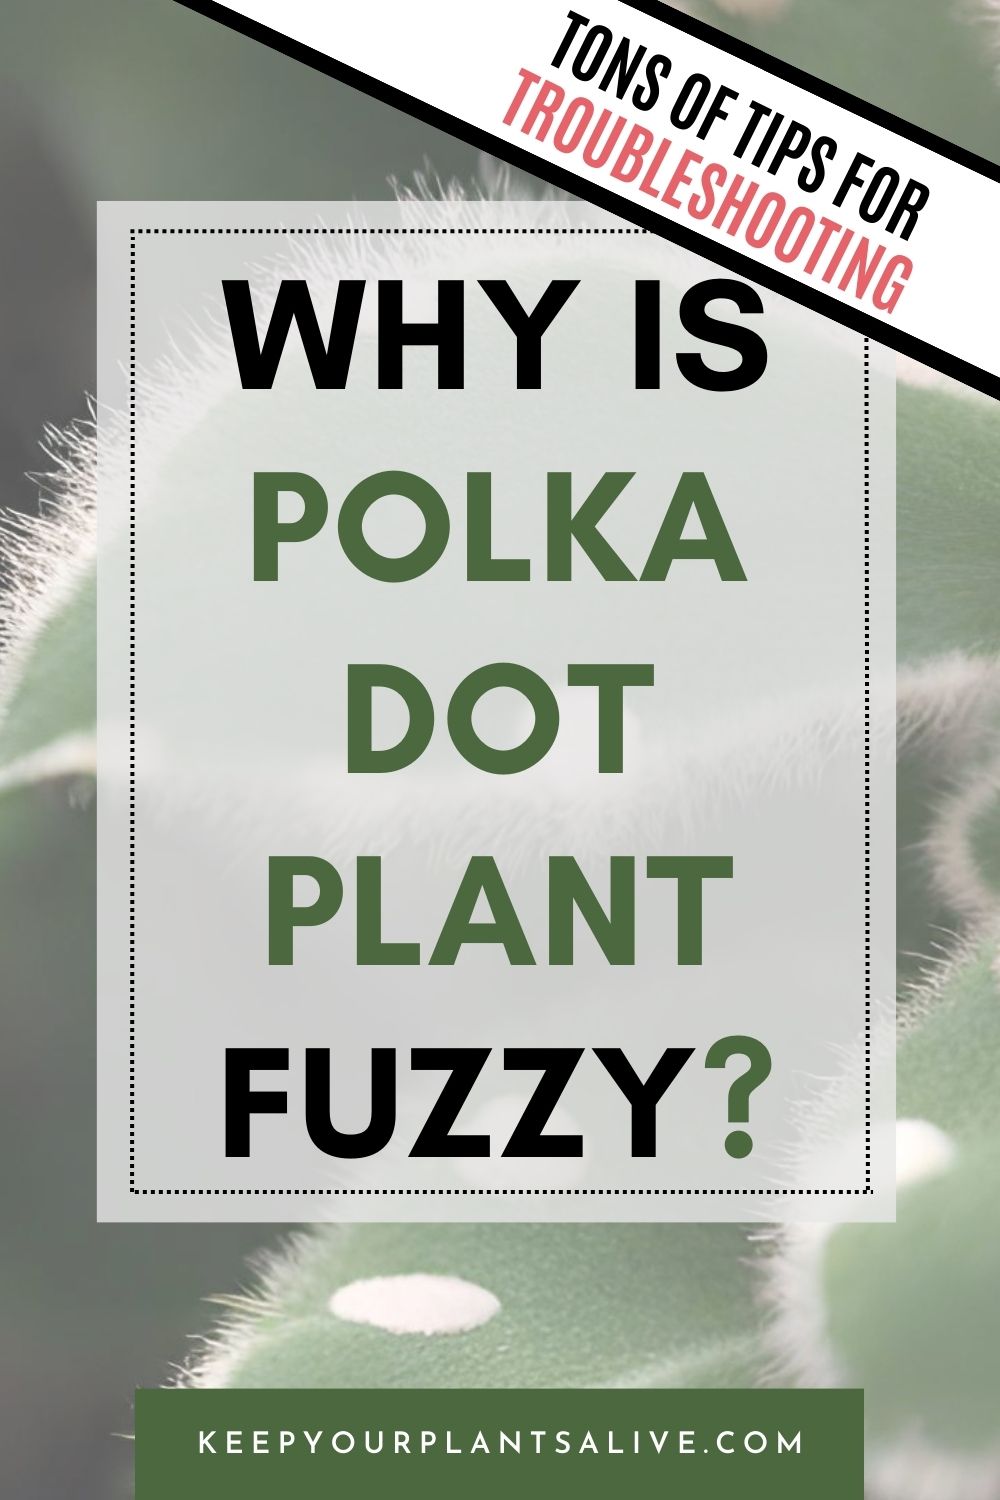 why is polka dot plant fuzzy?